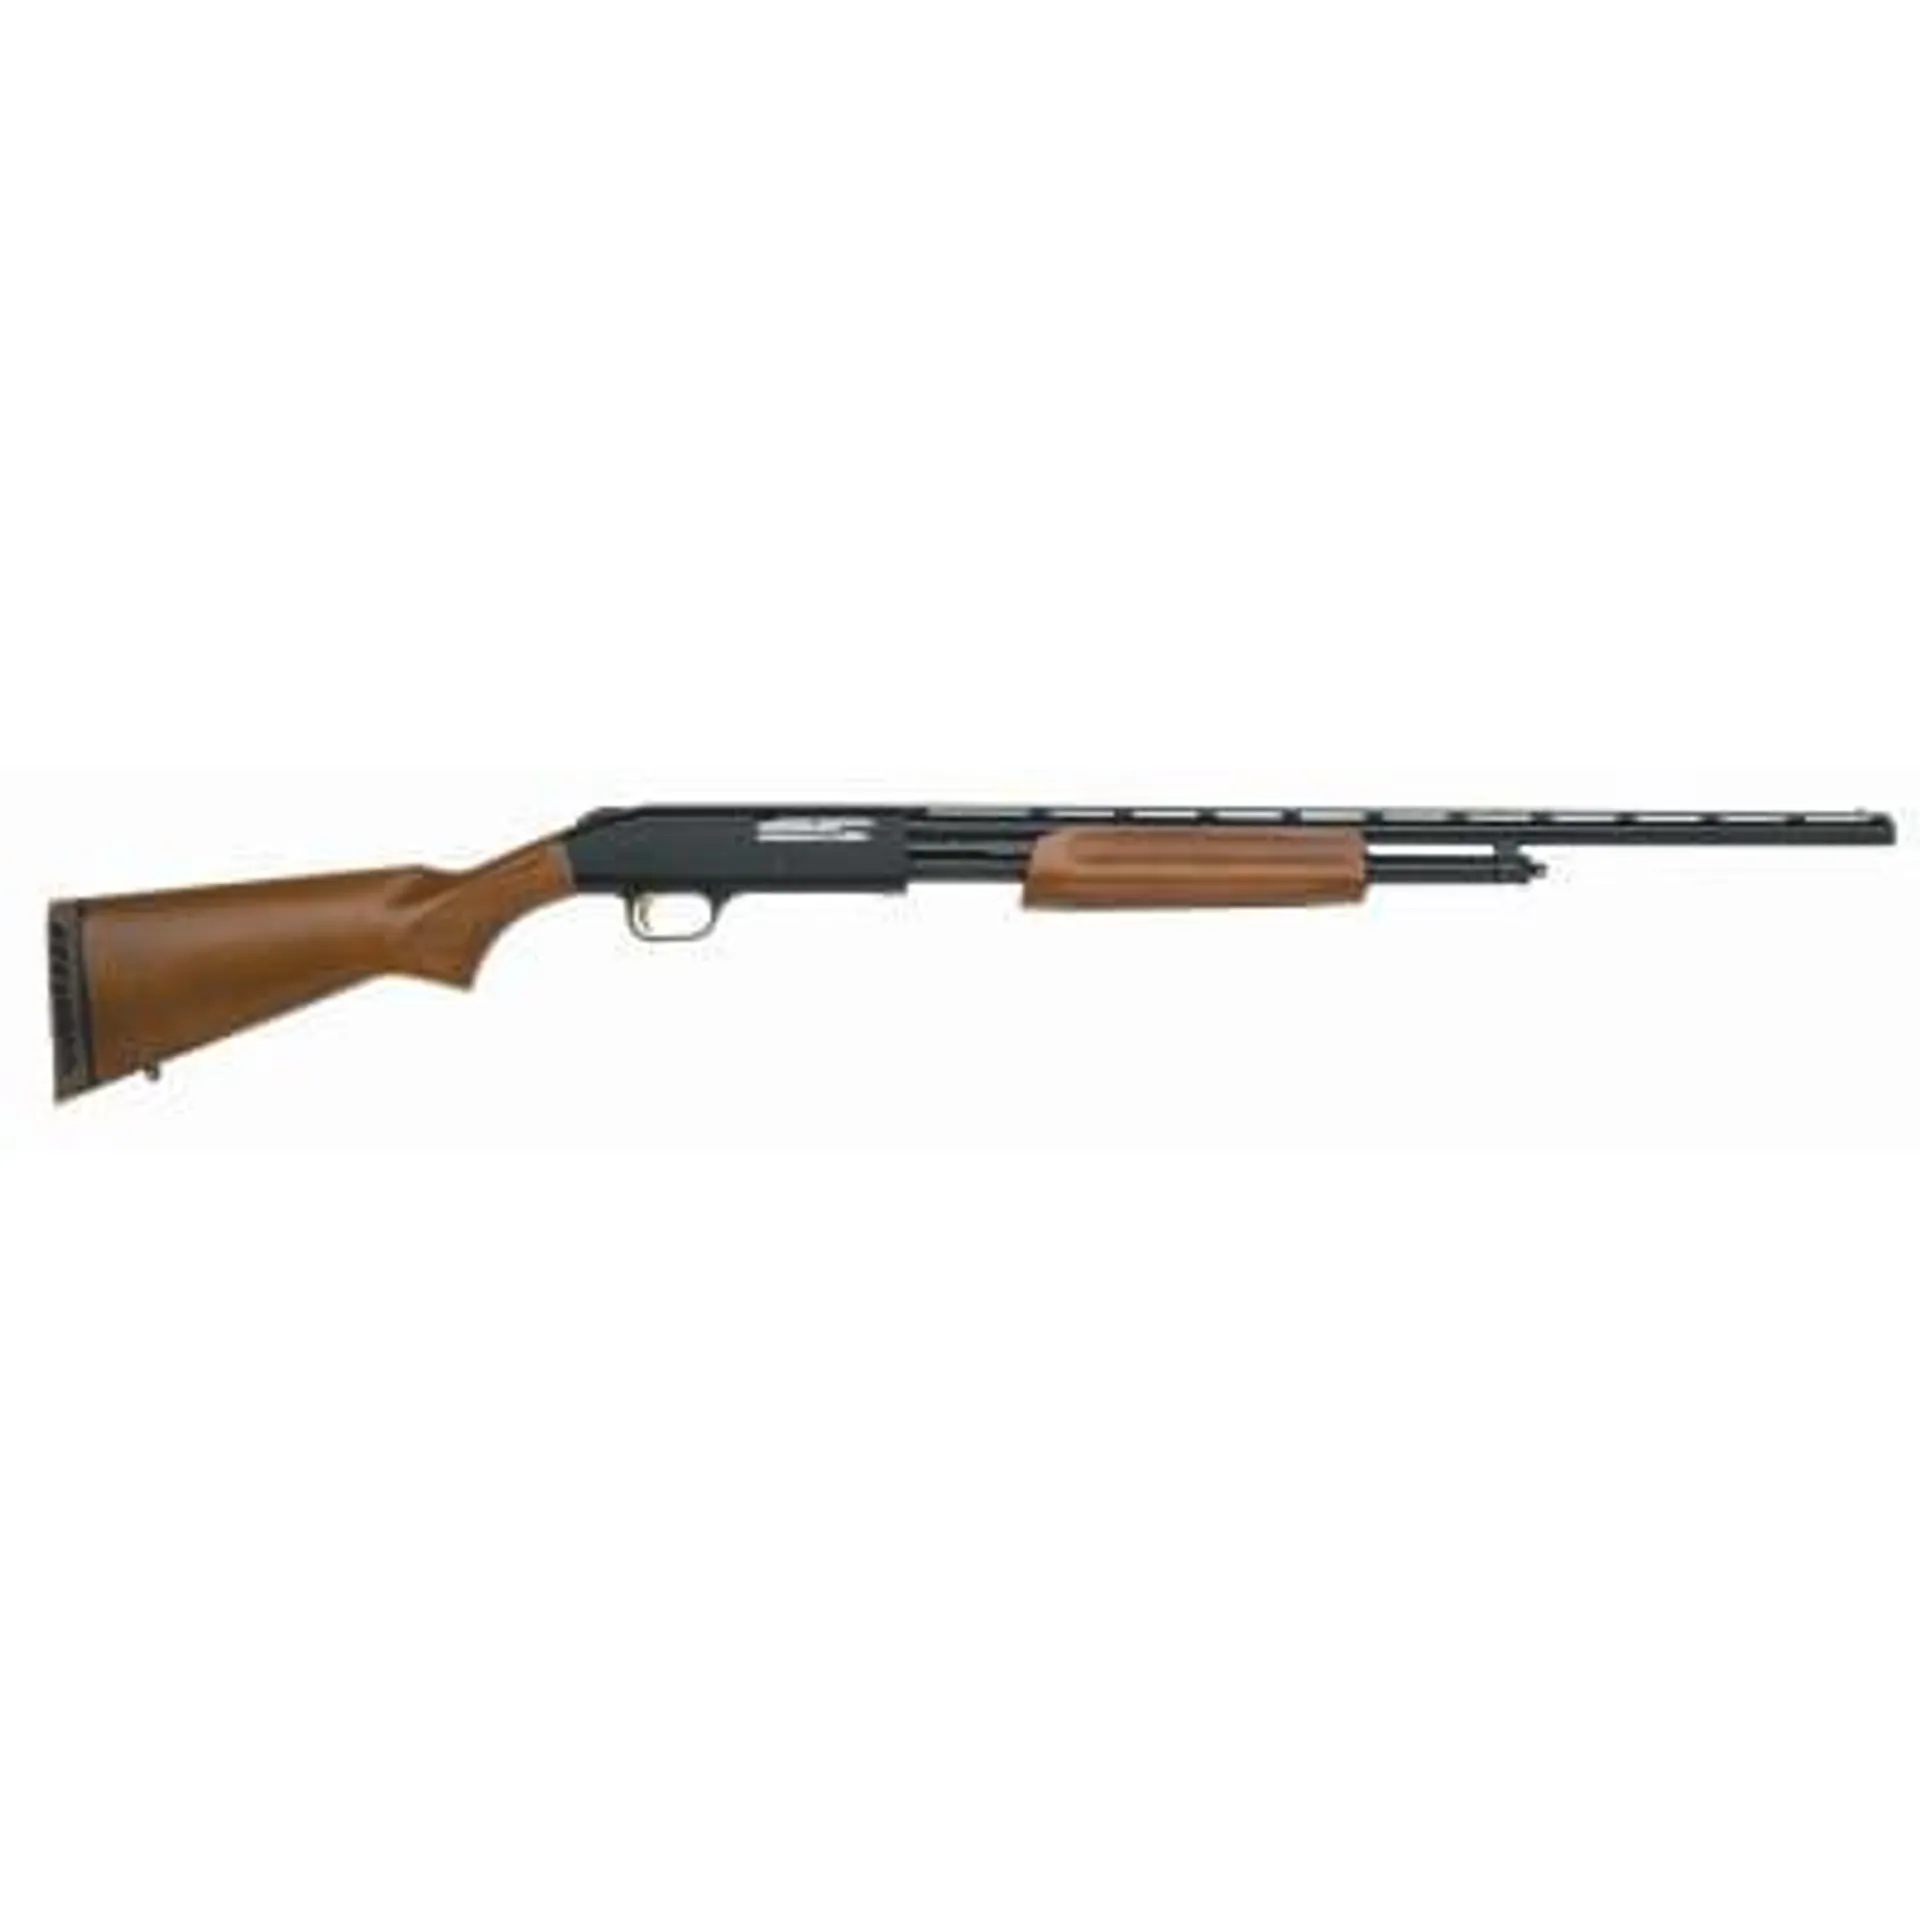 Mossberg 500 .410 Bore Pump-Action Wood Stock Shotgun